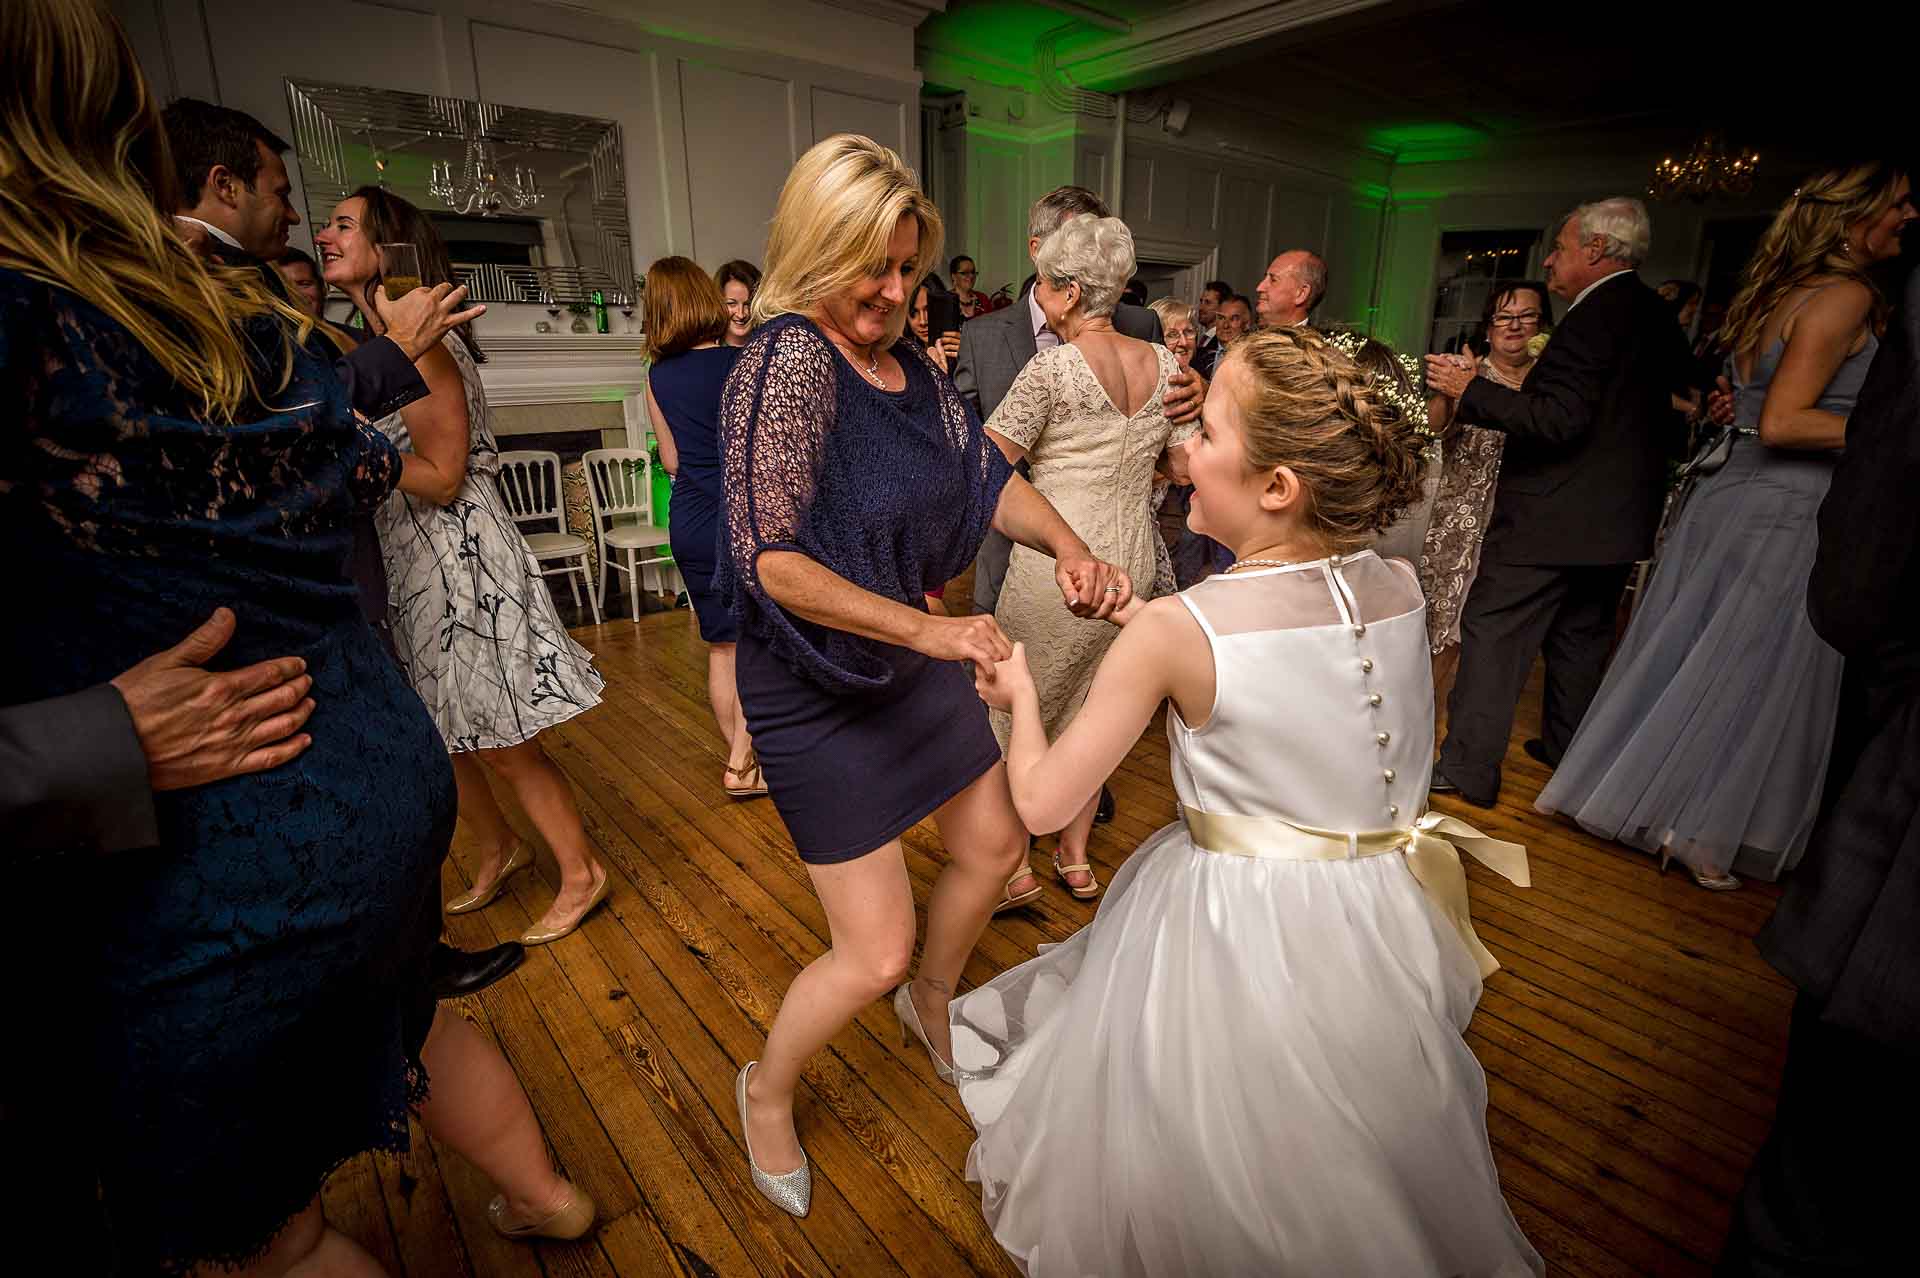 Woman dancing with girl at wedding